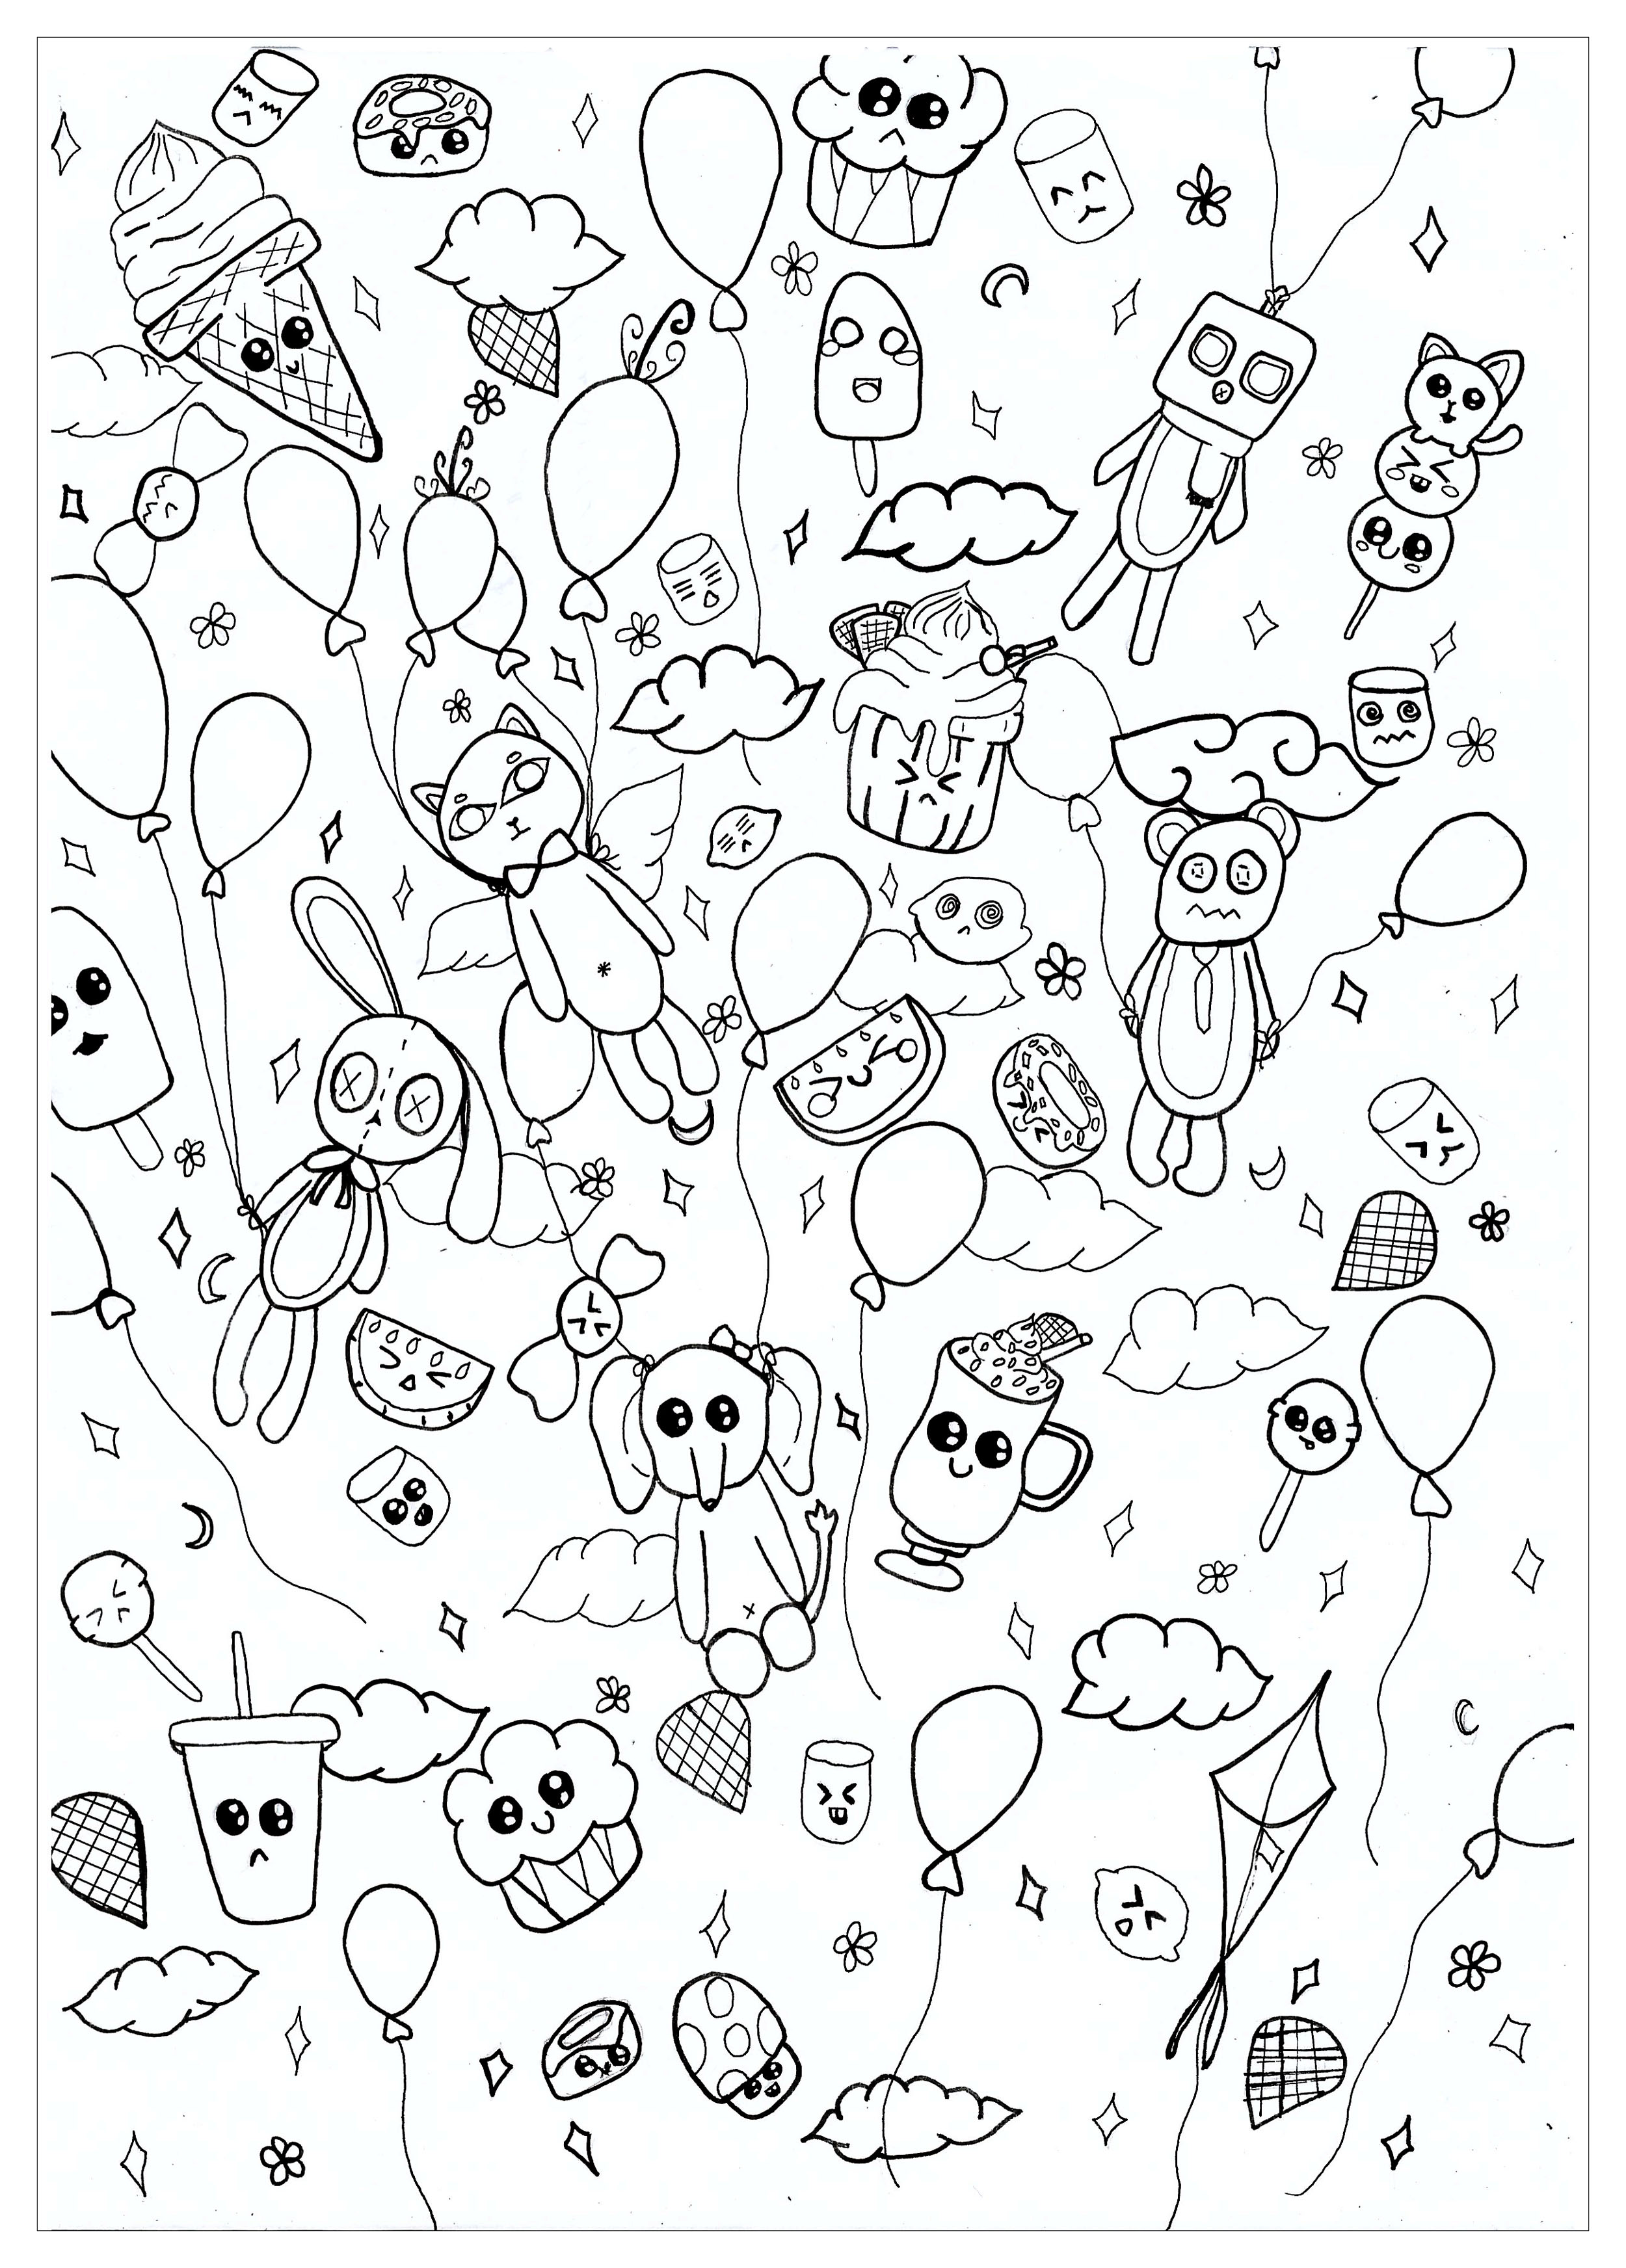 Kawaii to color for kids - Kawaii Kids Coloring Pages